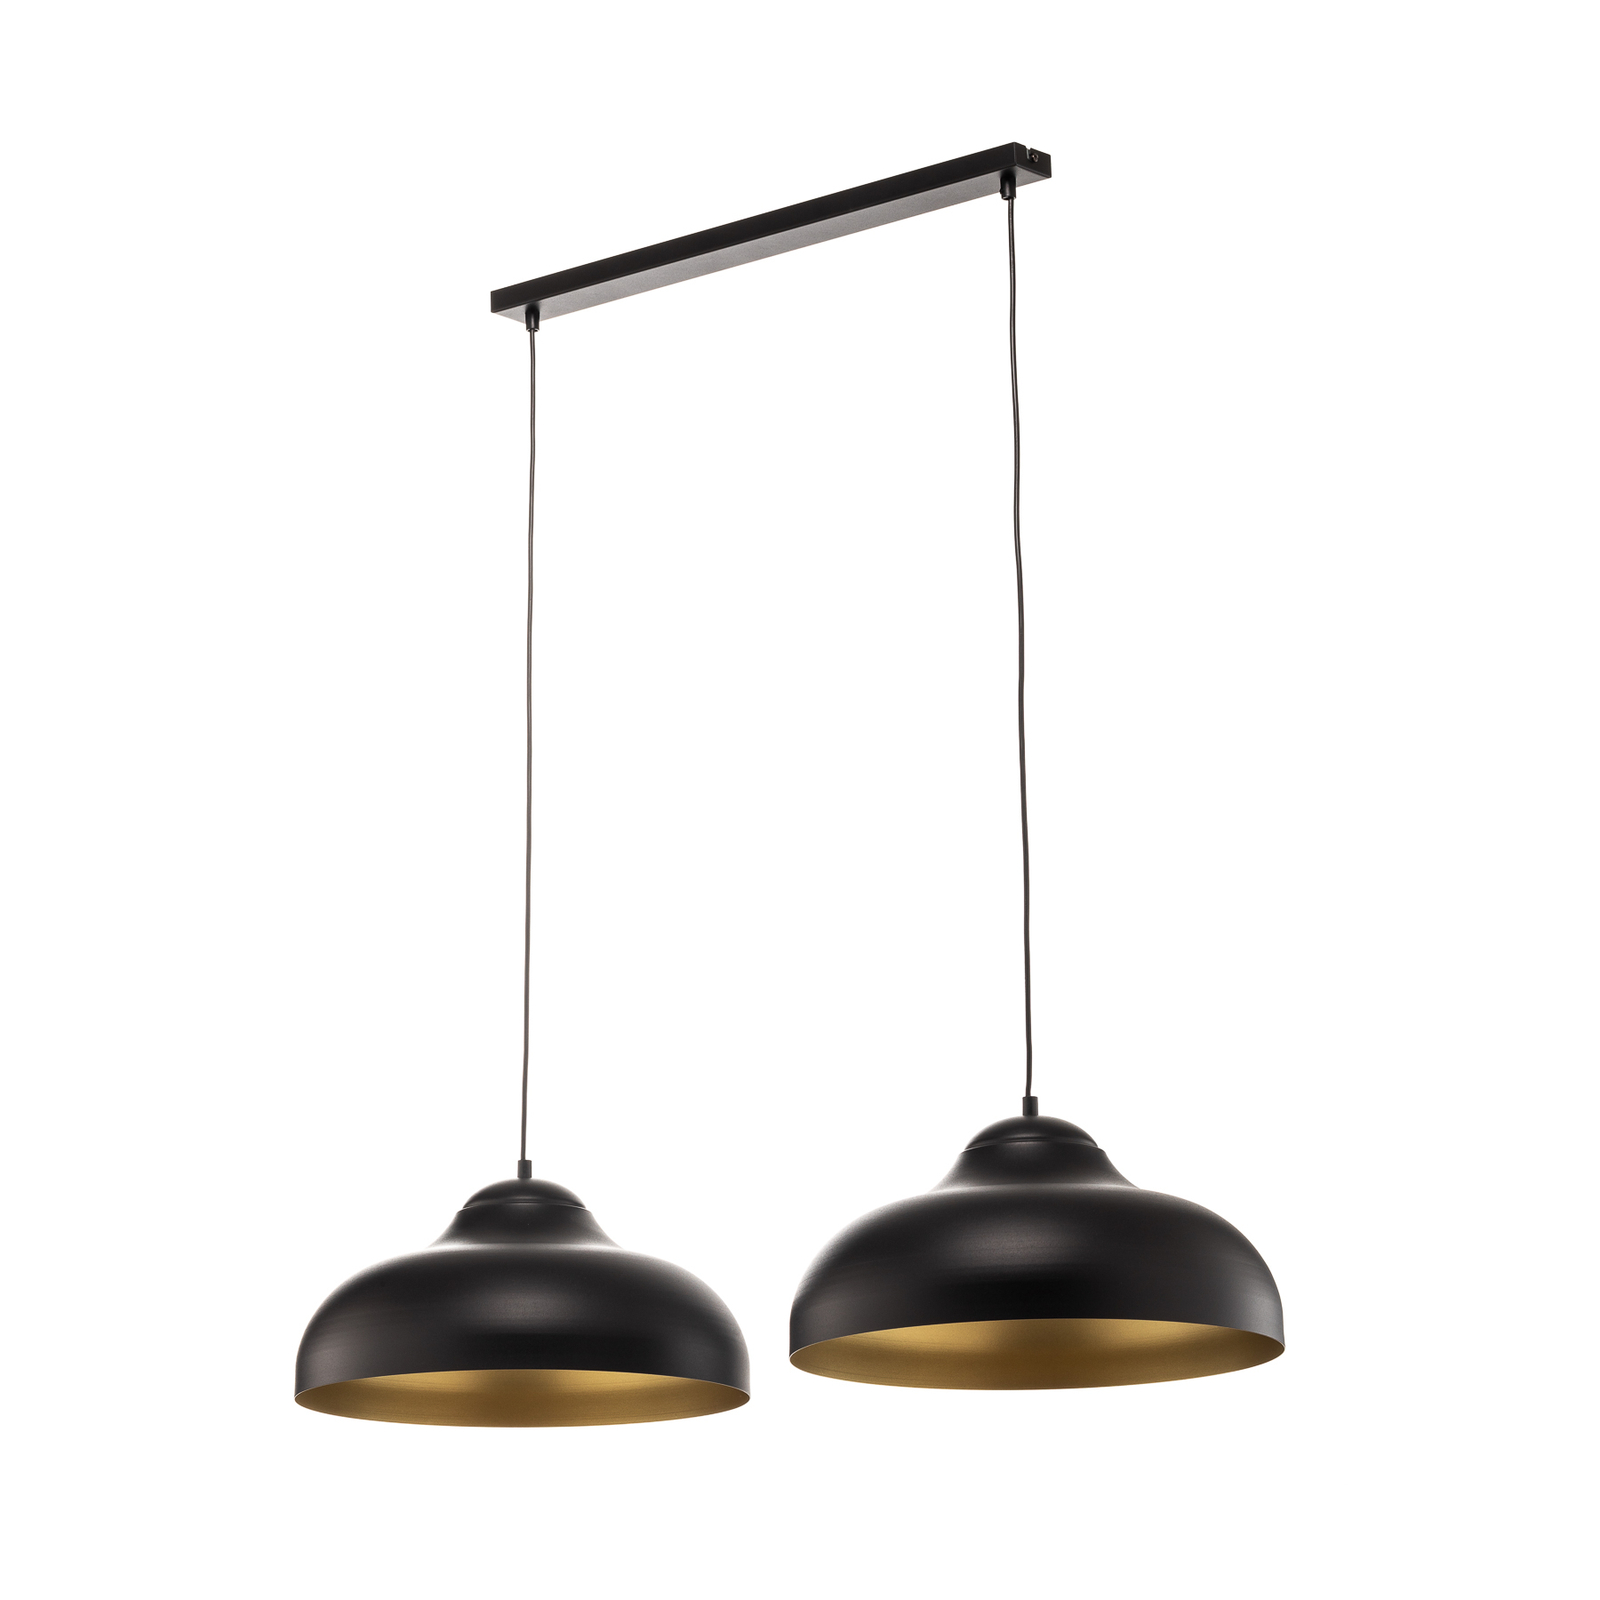 Basca hanging, black outside, gold inside 2-bulb